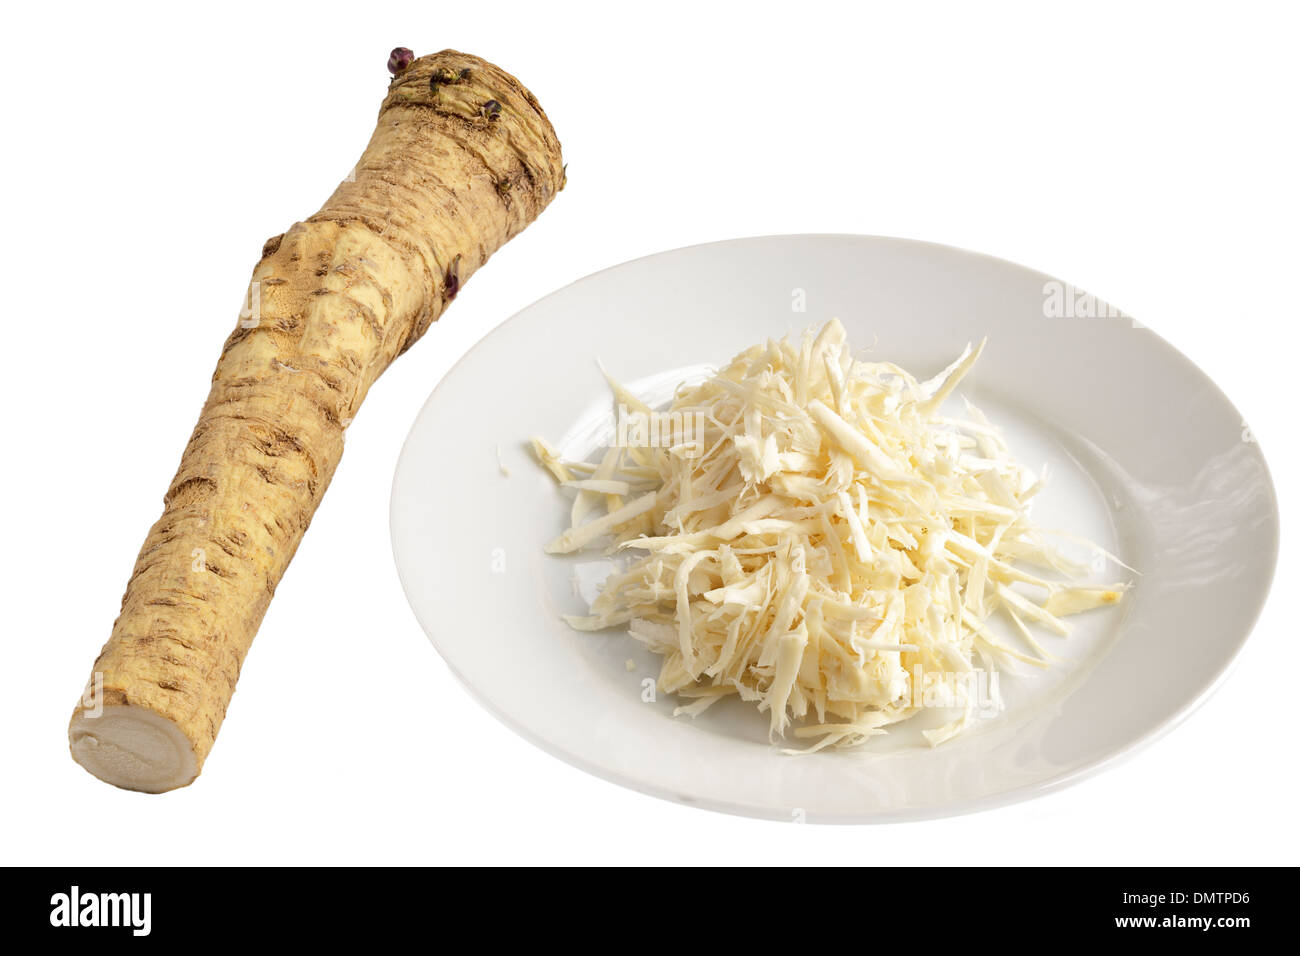 Horseradish, whole and grated Stock Photo